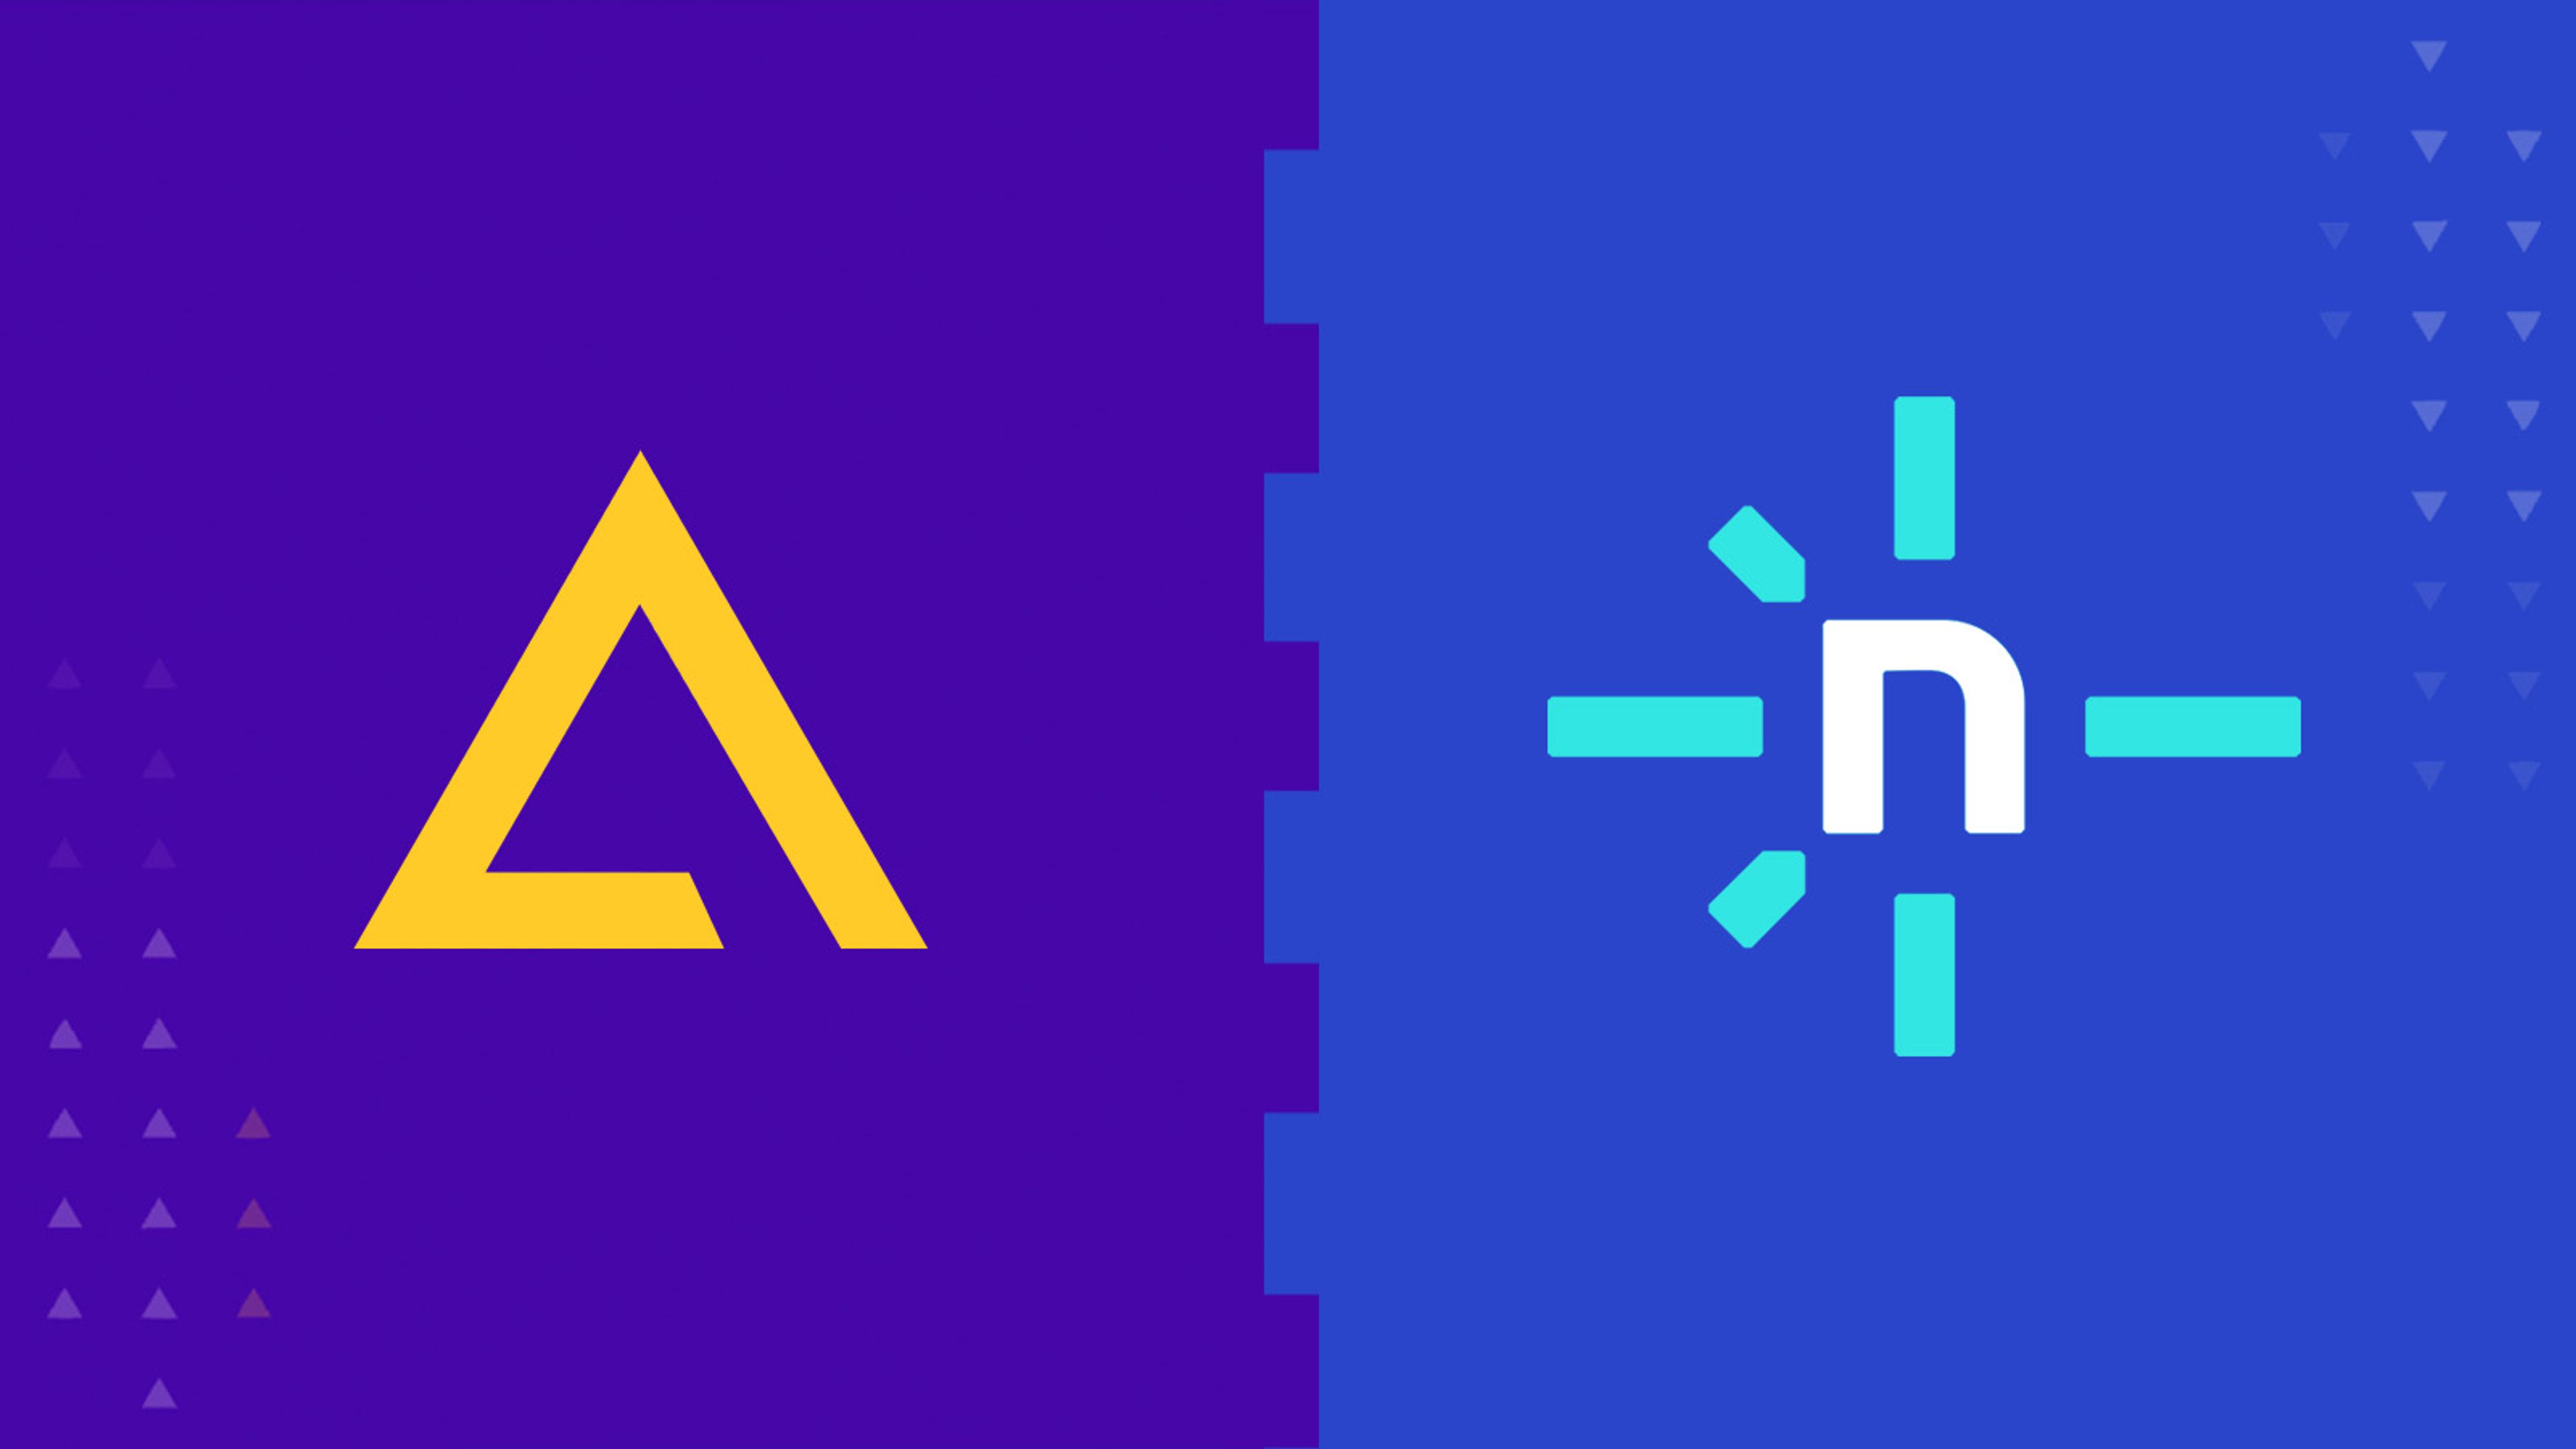 Agility CMS and Netlify logo icons